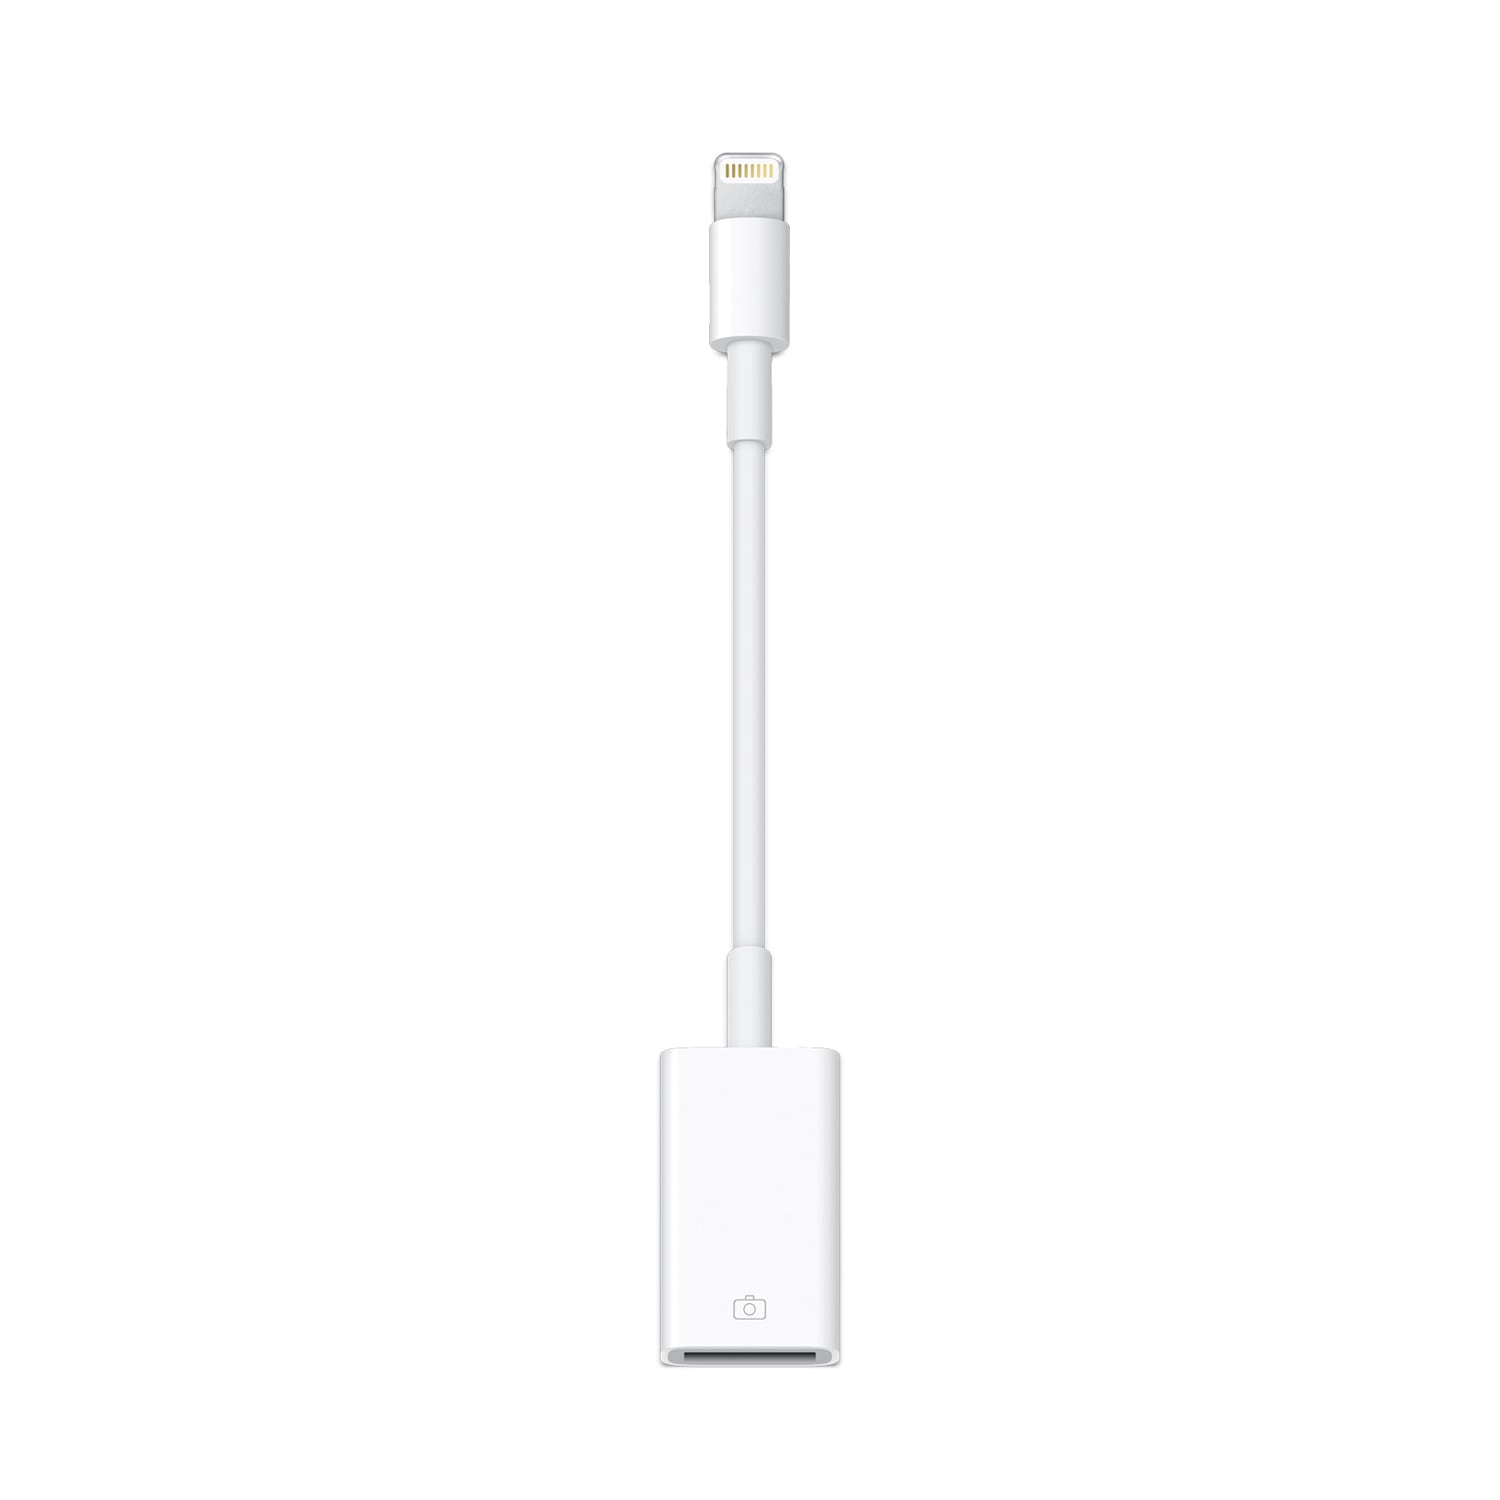 »Lightning Apple ➥ XXL MD821ZM/A USB«, Garantie zu | Jahre UNIVERSAL 3 Smartphone-Adapter